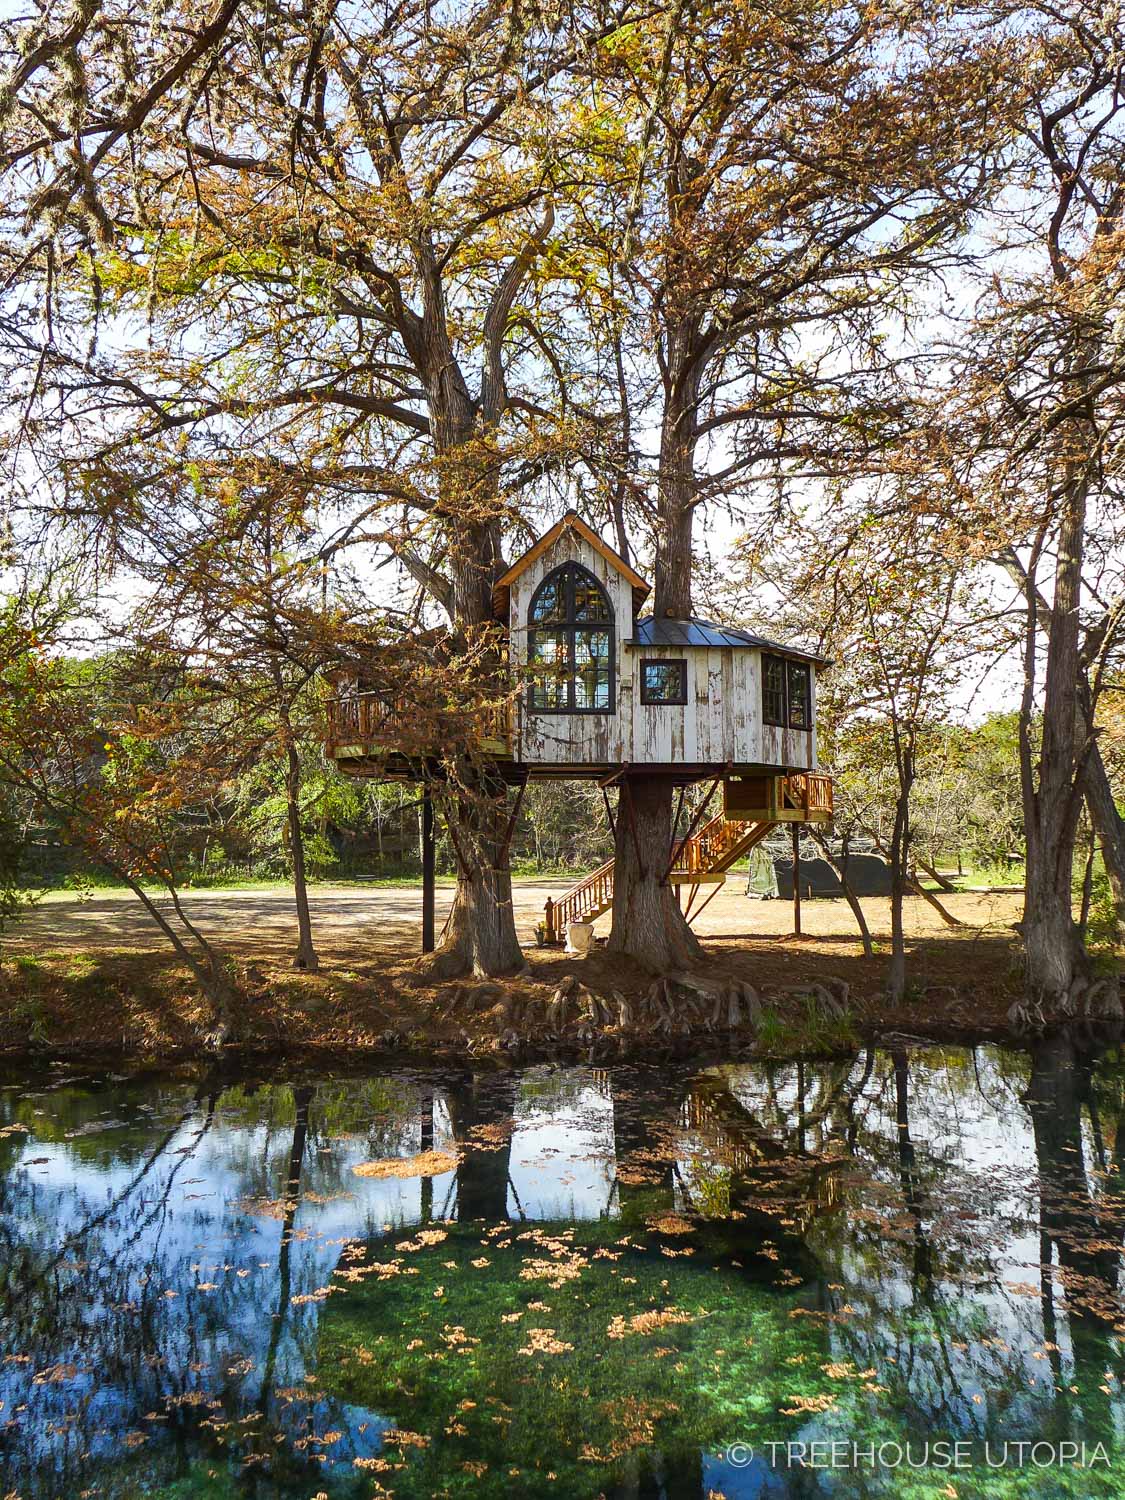  Stay overnight at Treehouse Utopia, Texas 